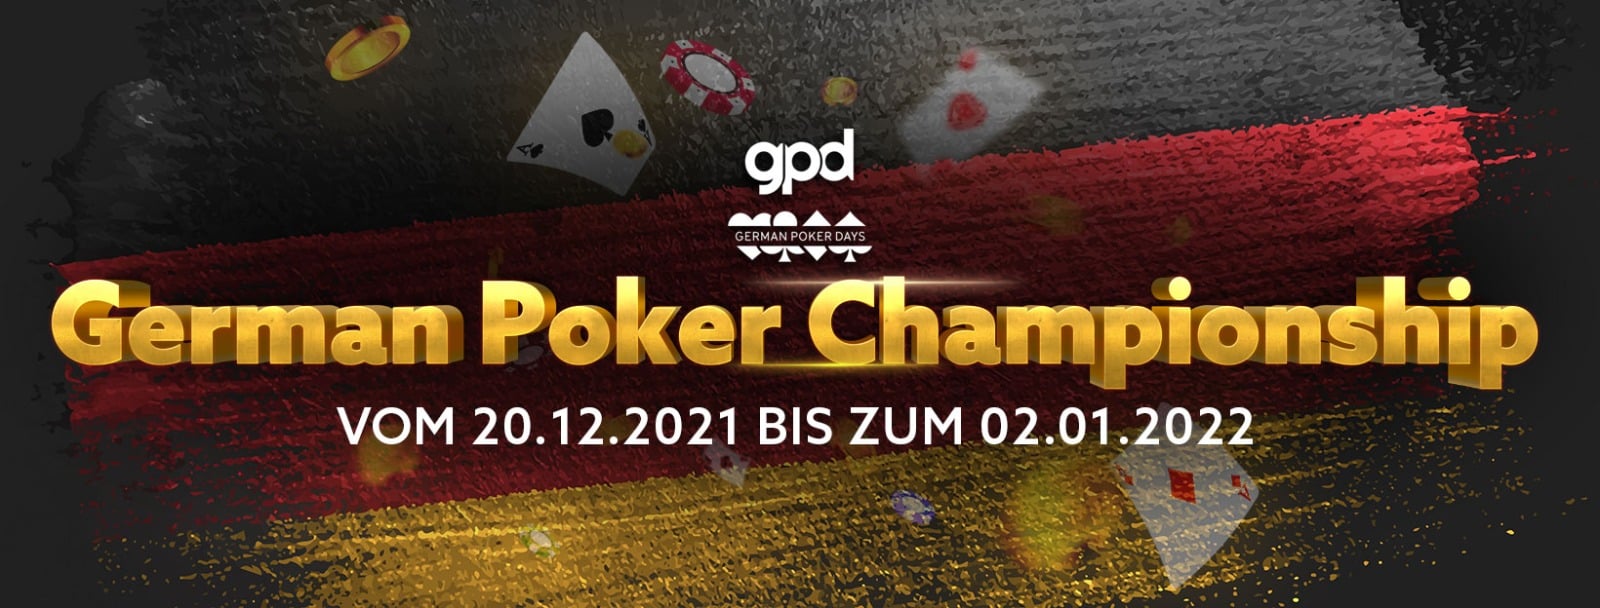 German Poker Championship – Starttag 2